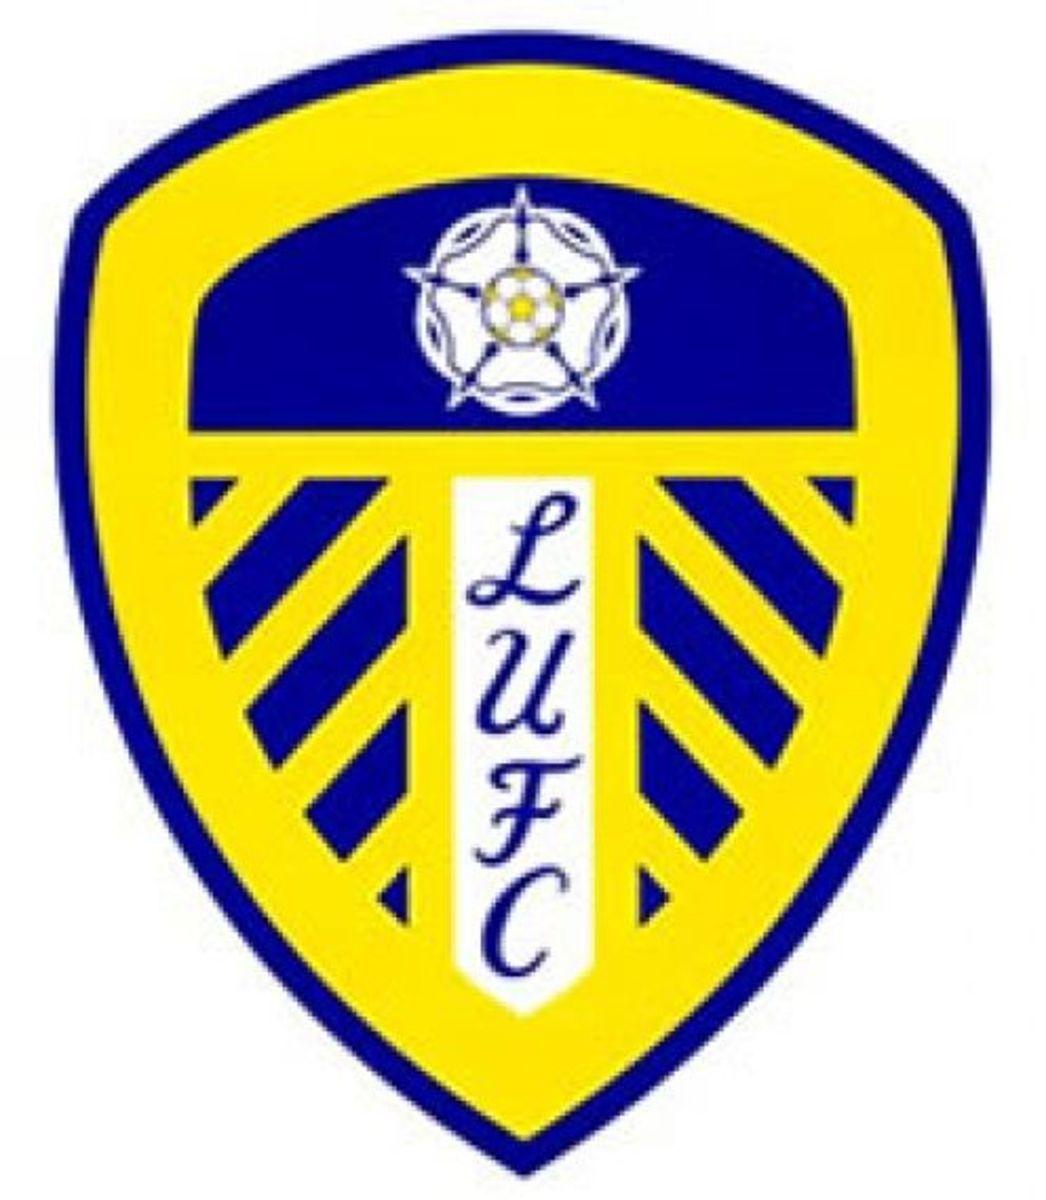 Brown and Yellow Team Logo - James Brown: My Leeds Utd 5aside Dream Team